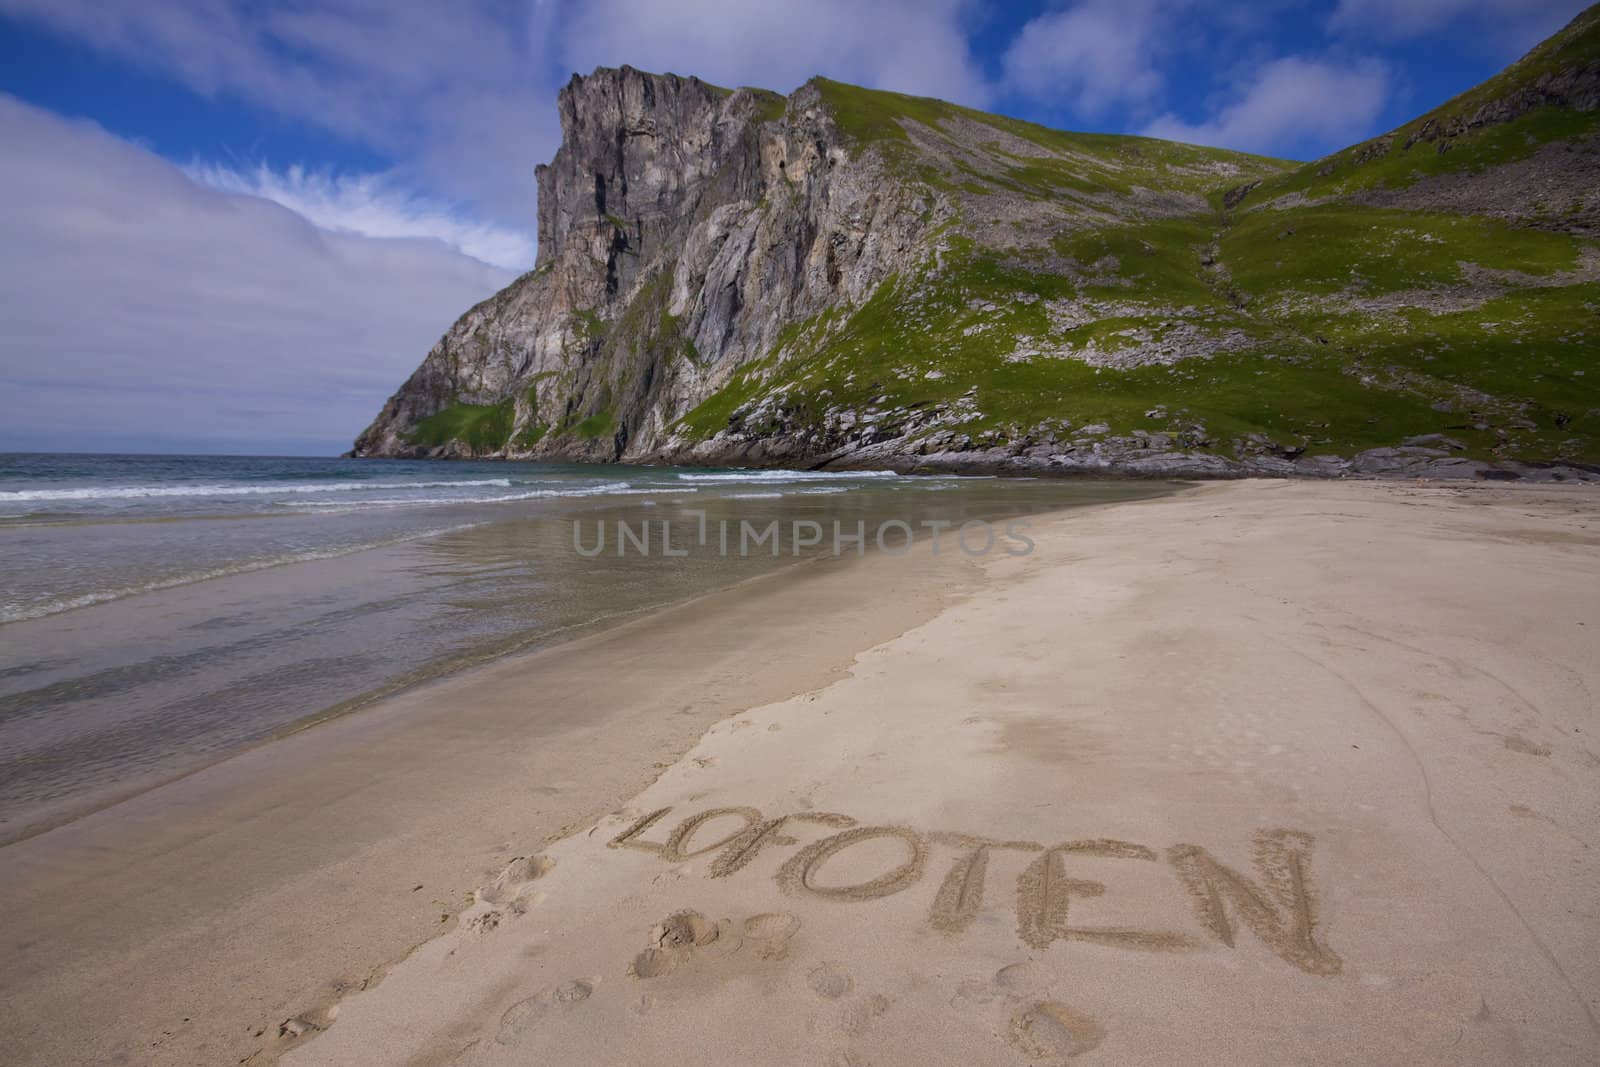 Picturesque beach on Lofoten islands in Norway with word "Lofoten" written in the sand